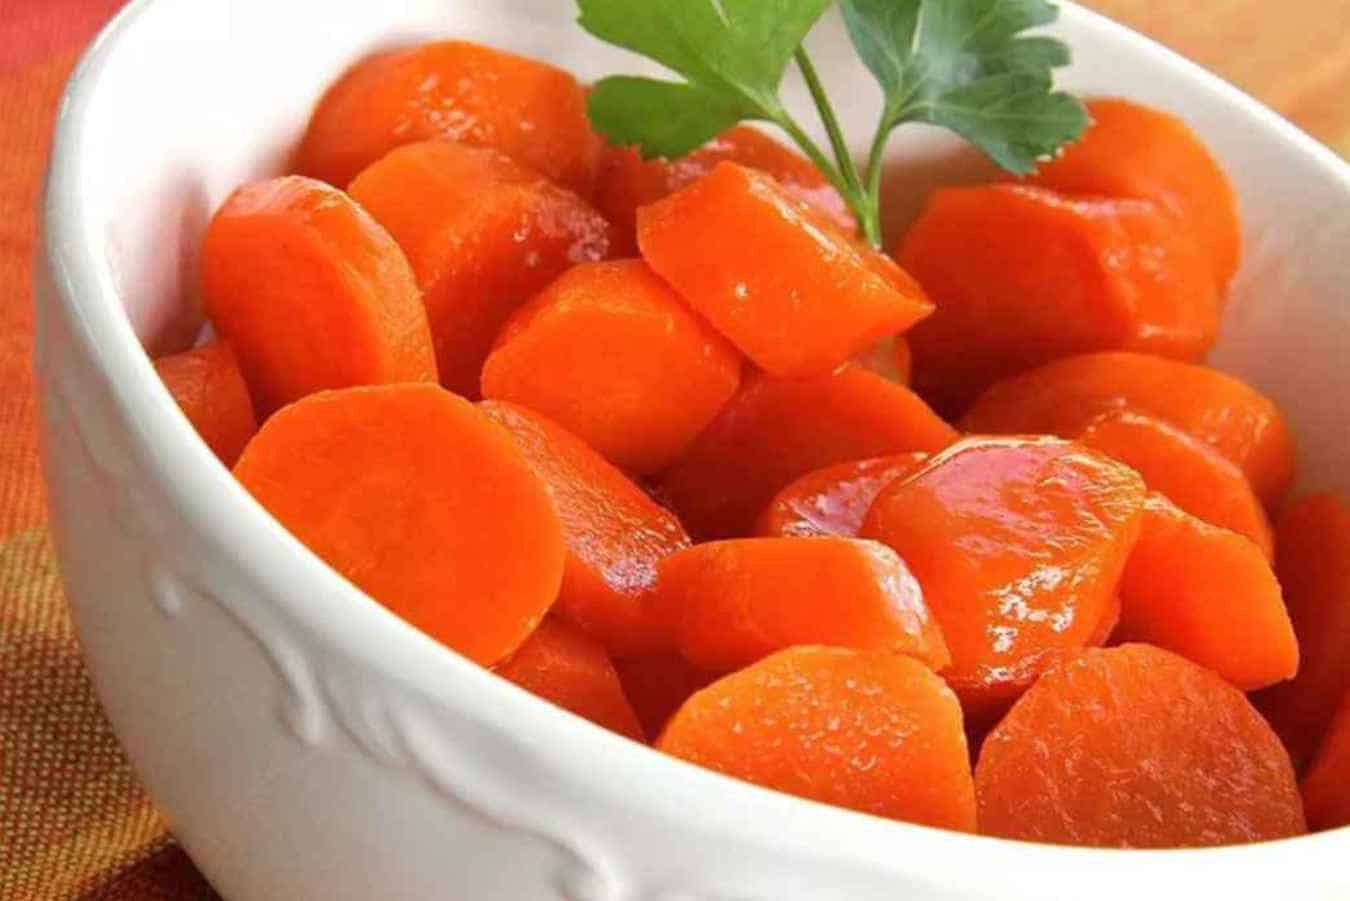 Maple-Glazed Carrots